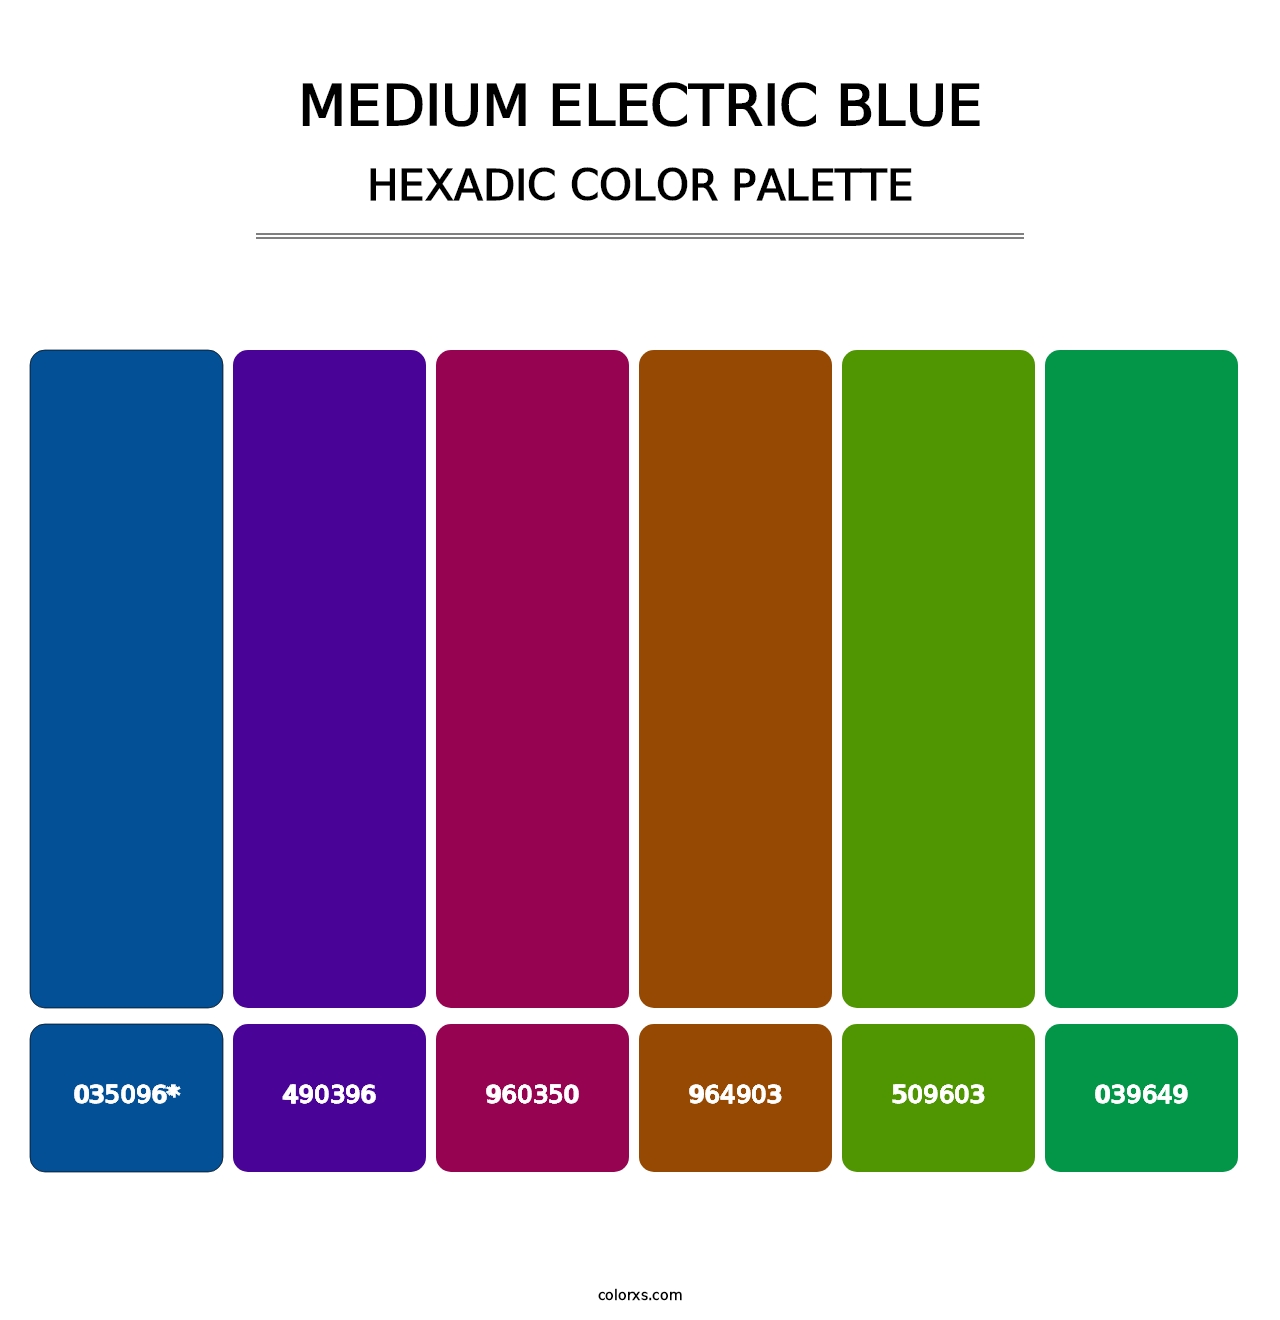 Medium Electric Blue - Hexadic Color Palette